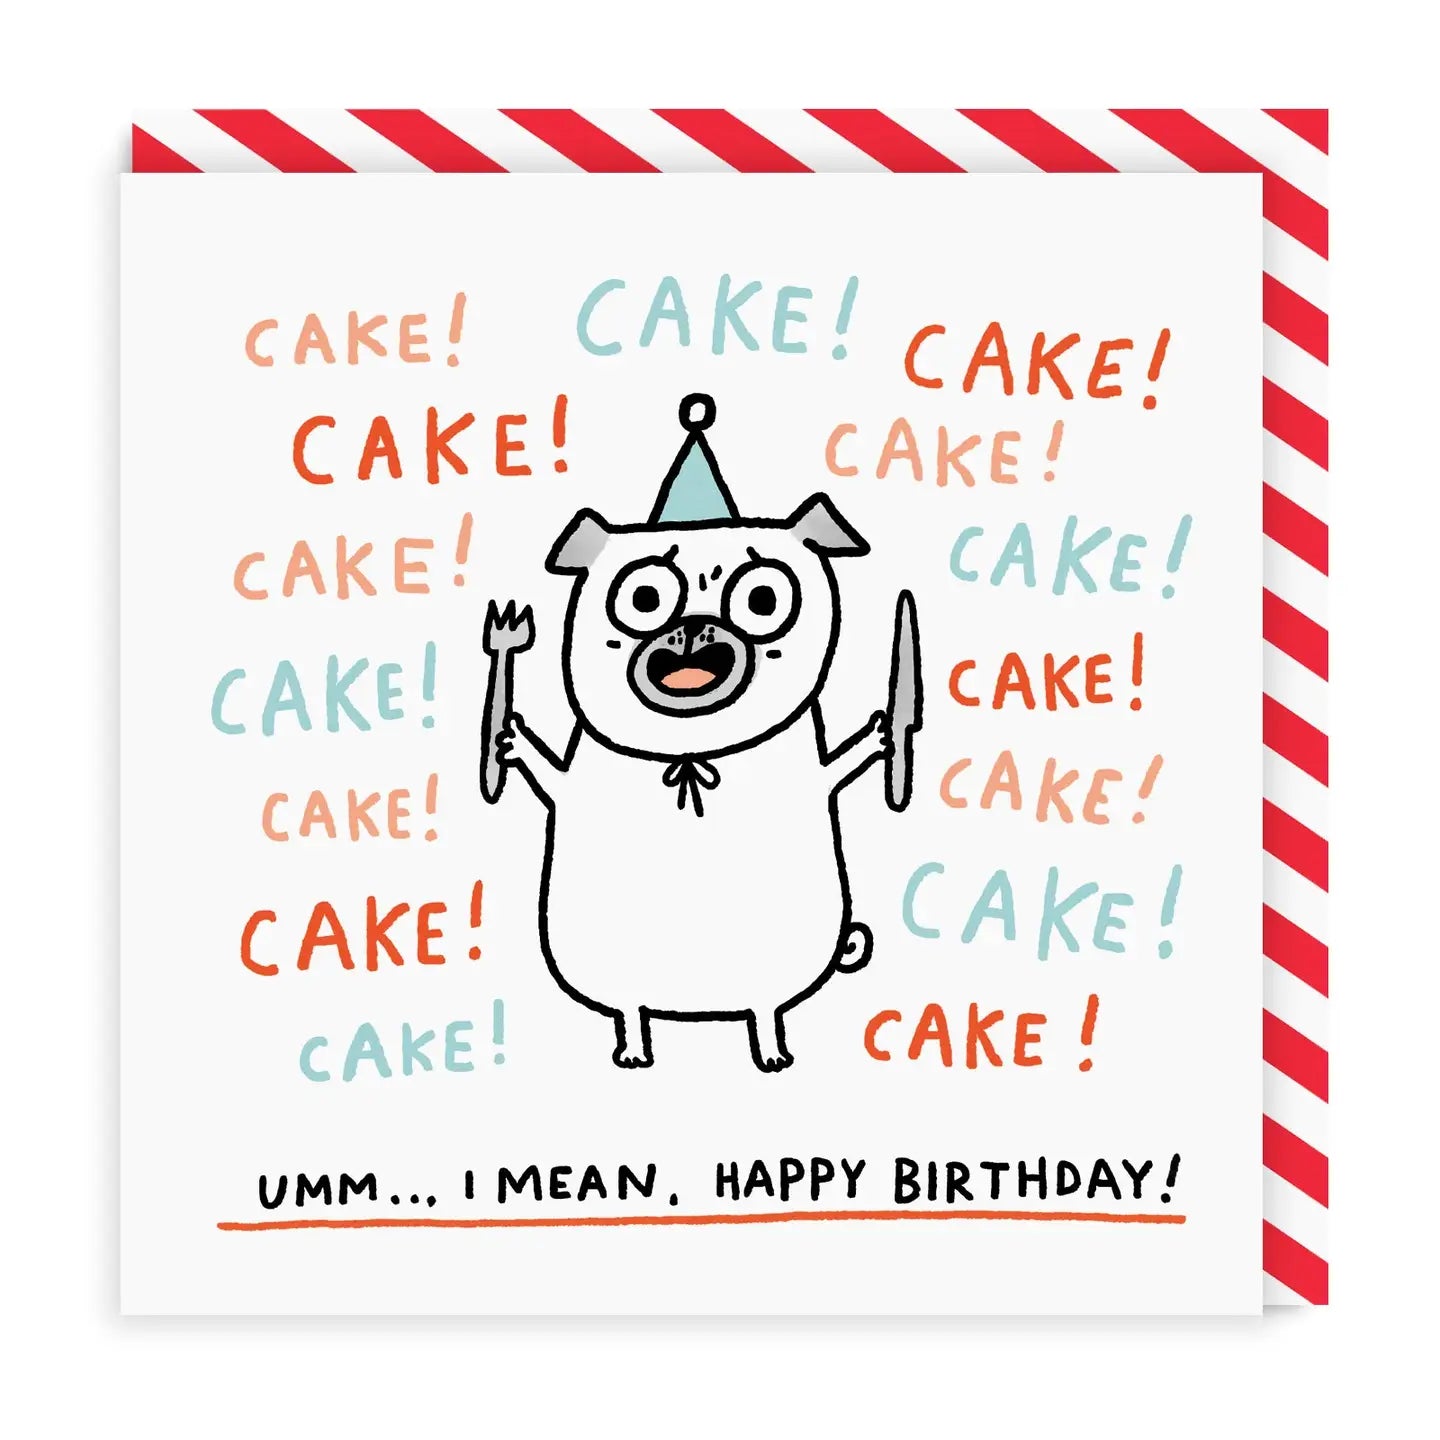 Cake card